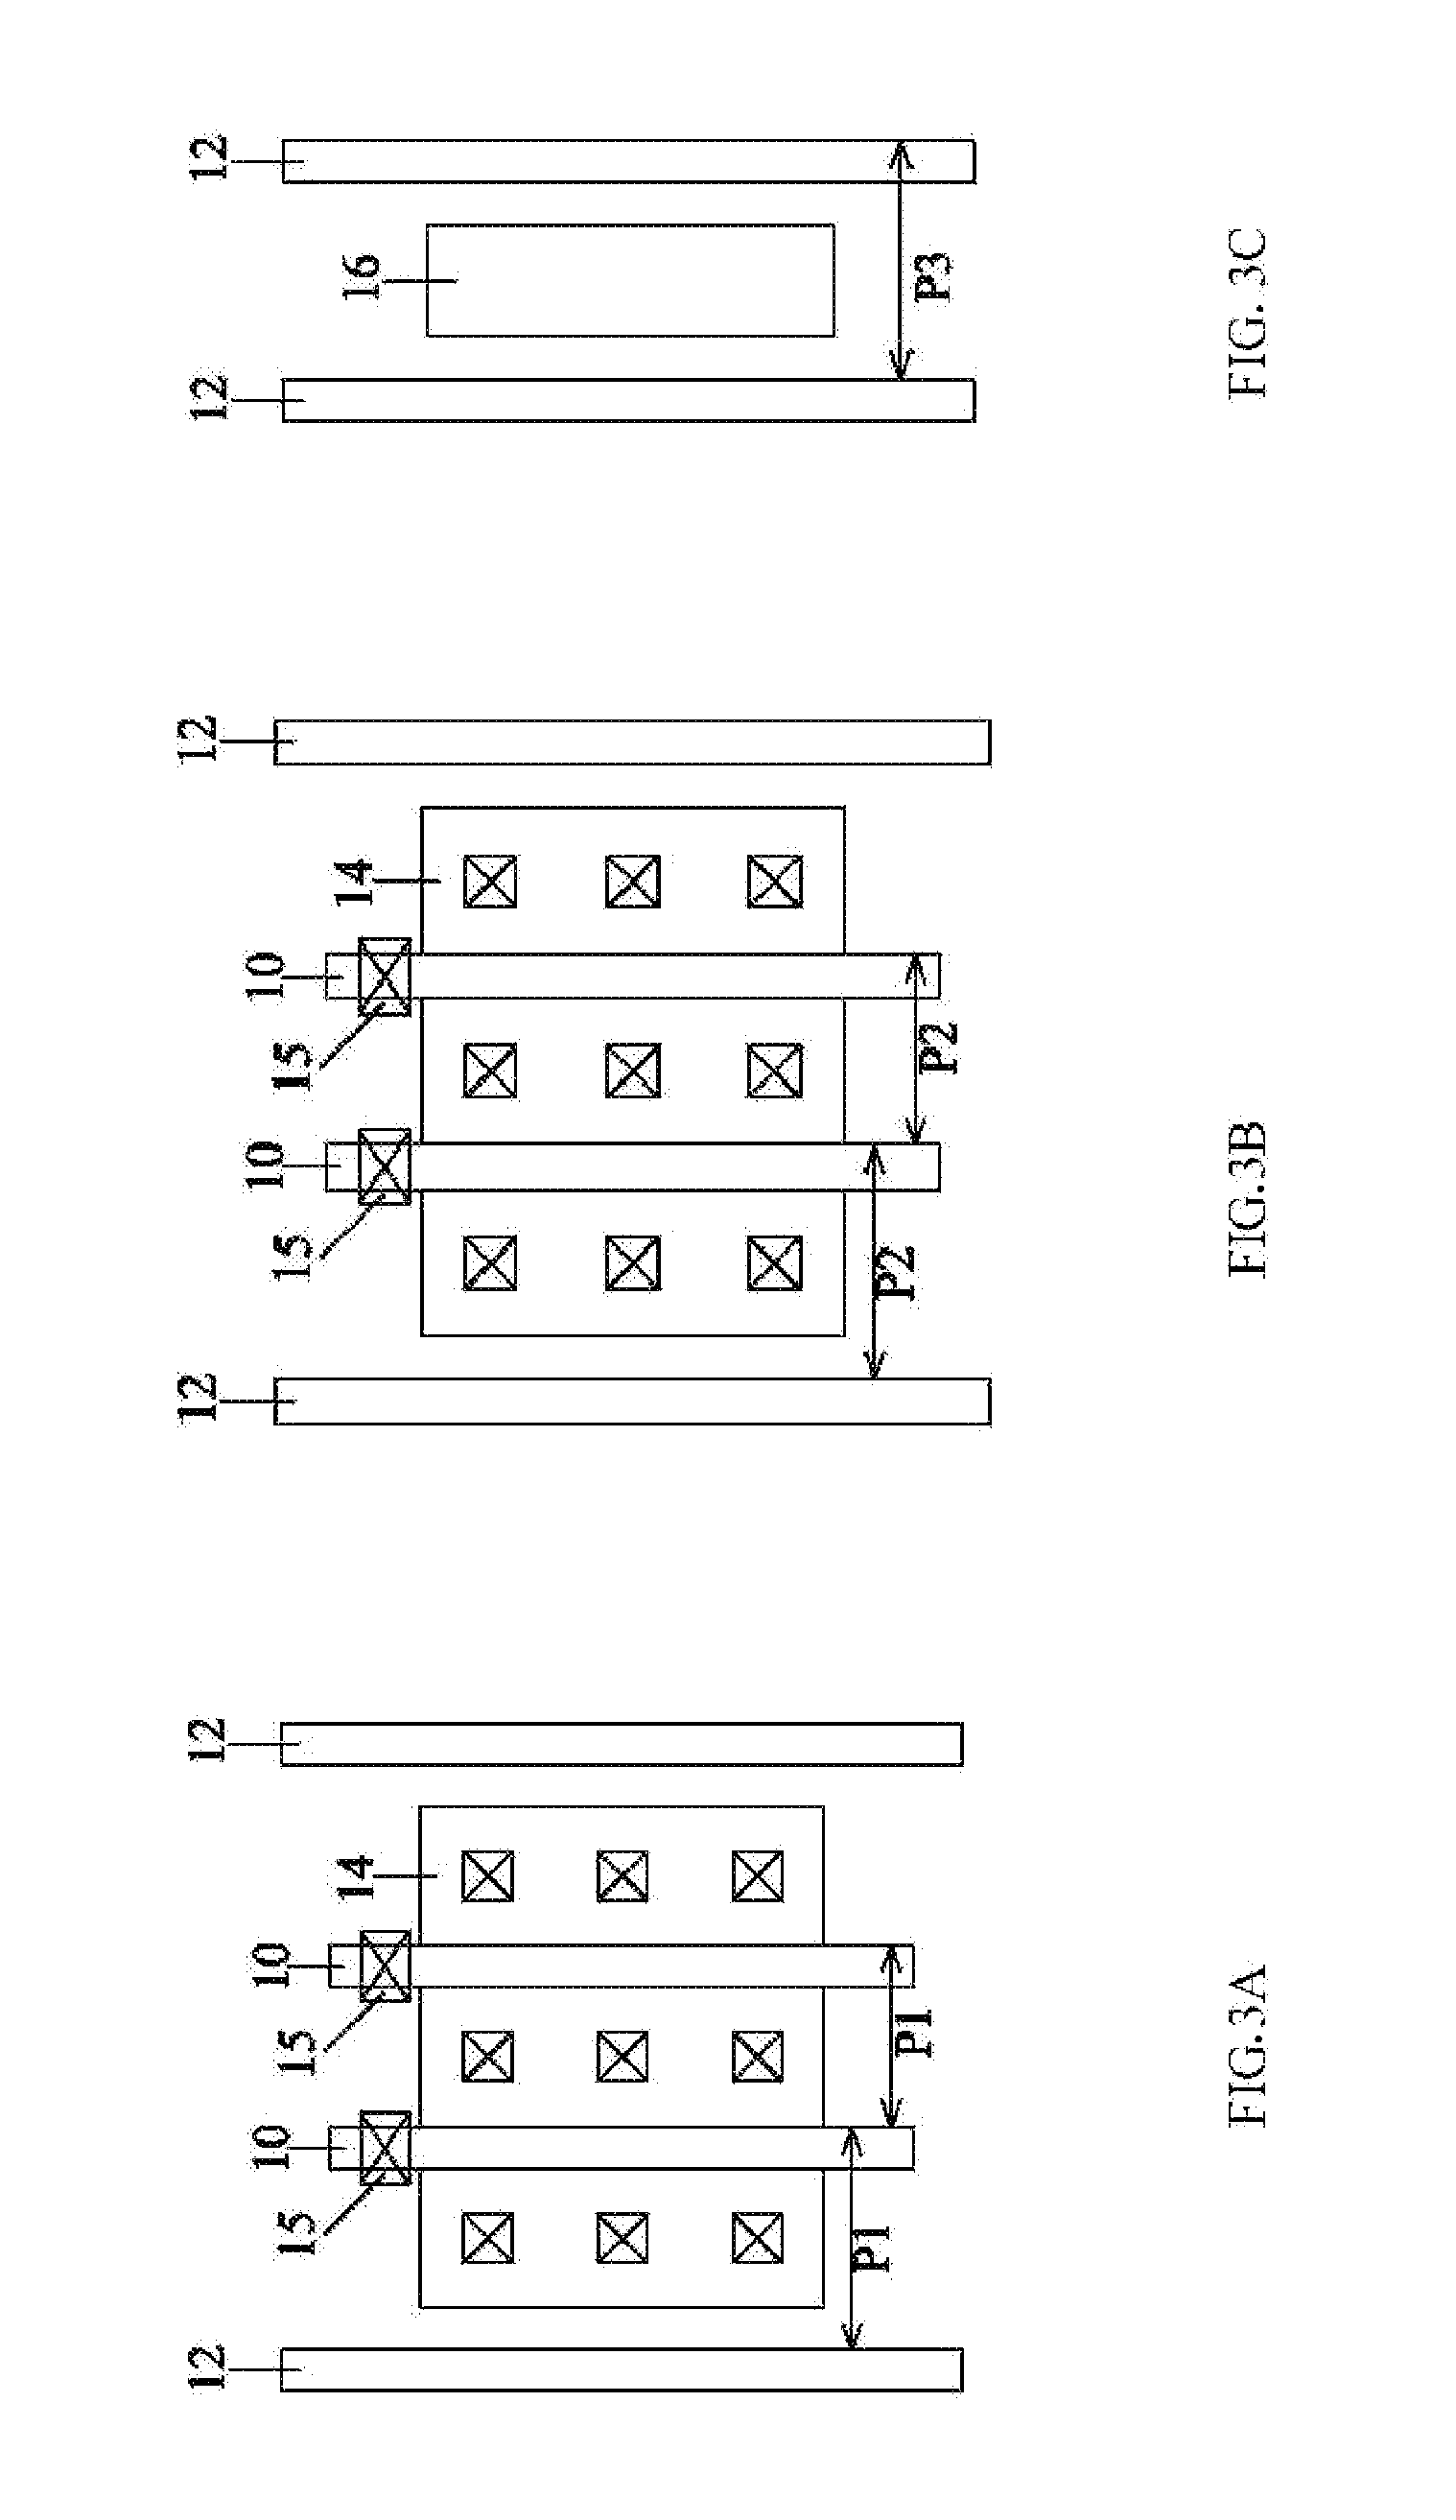 Programmable Transistor Array Design Methodology